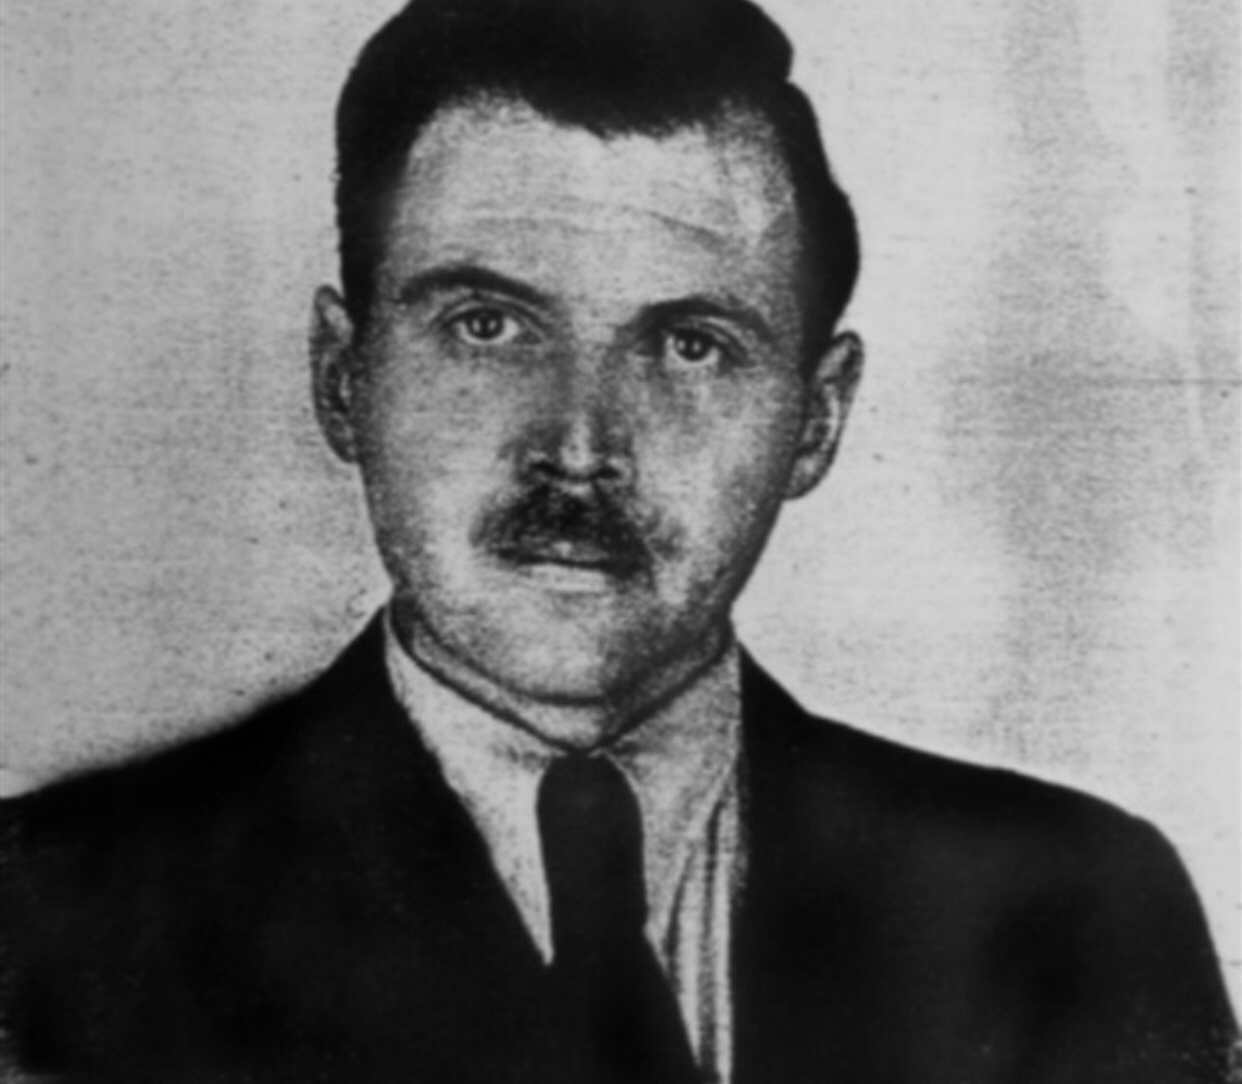 Josef Rudolf Mengele